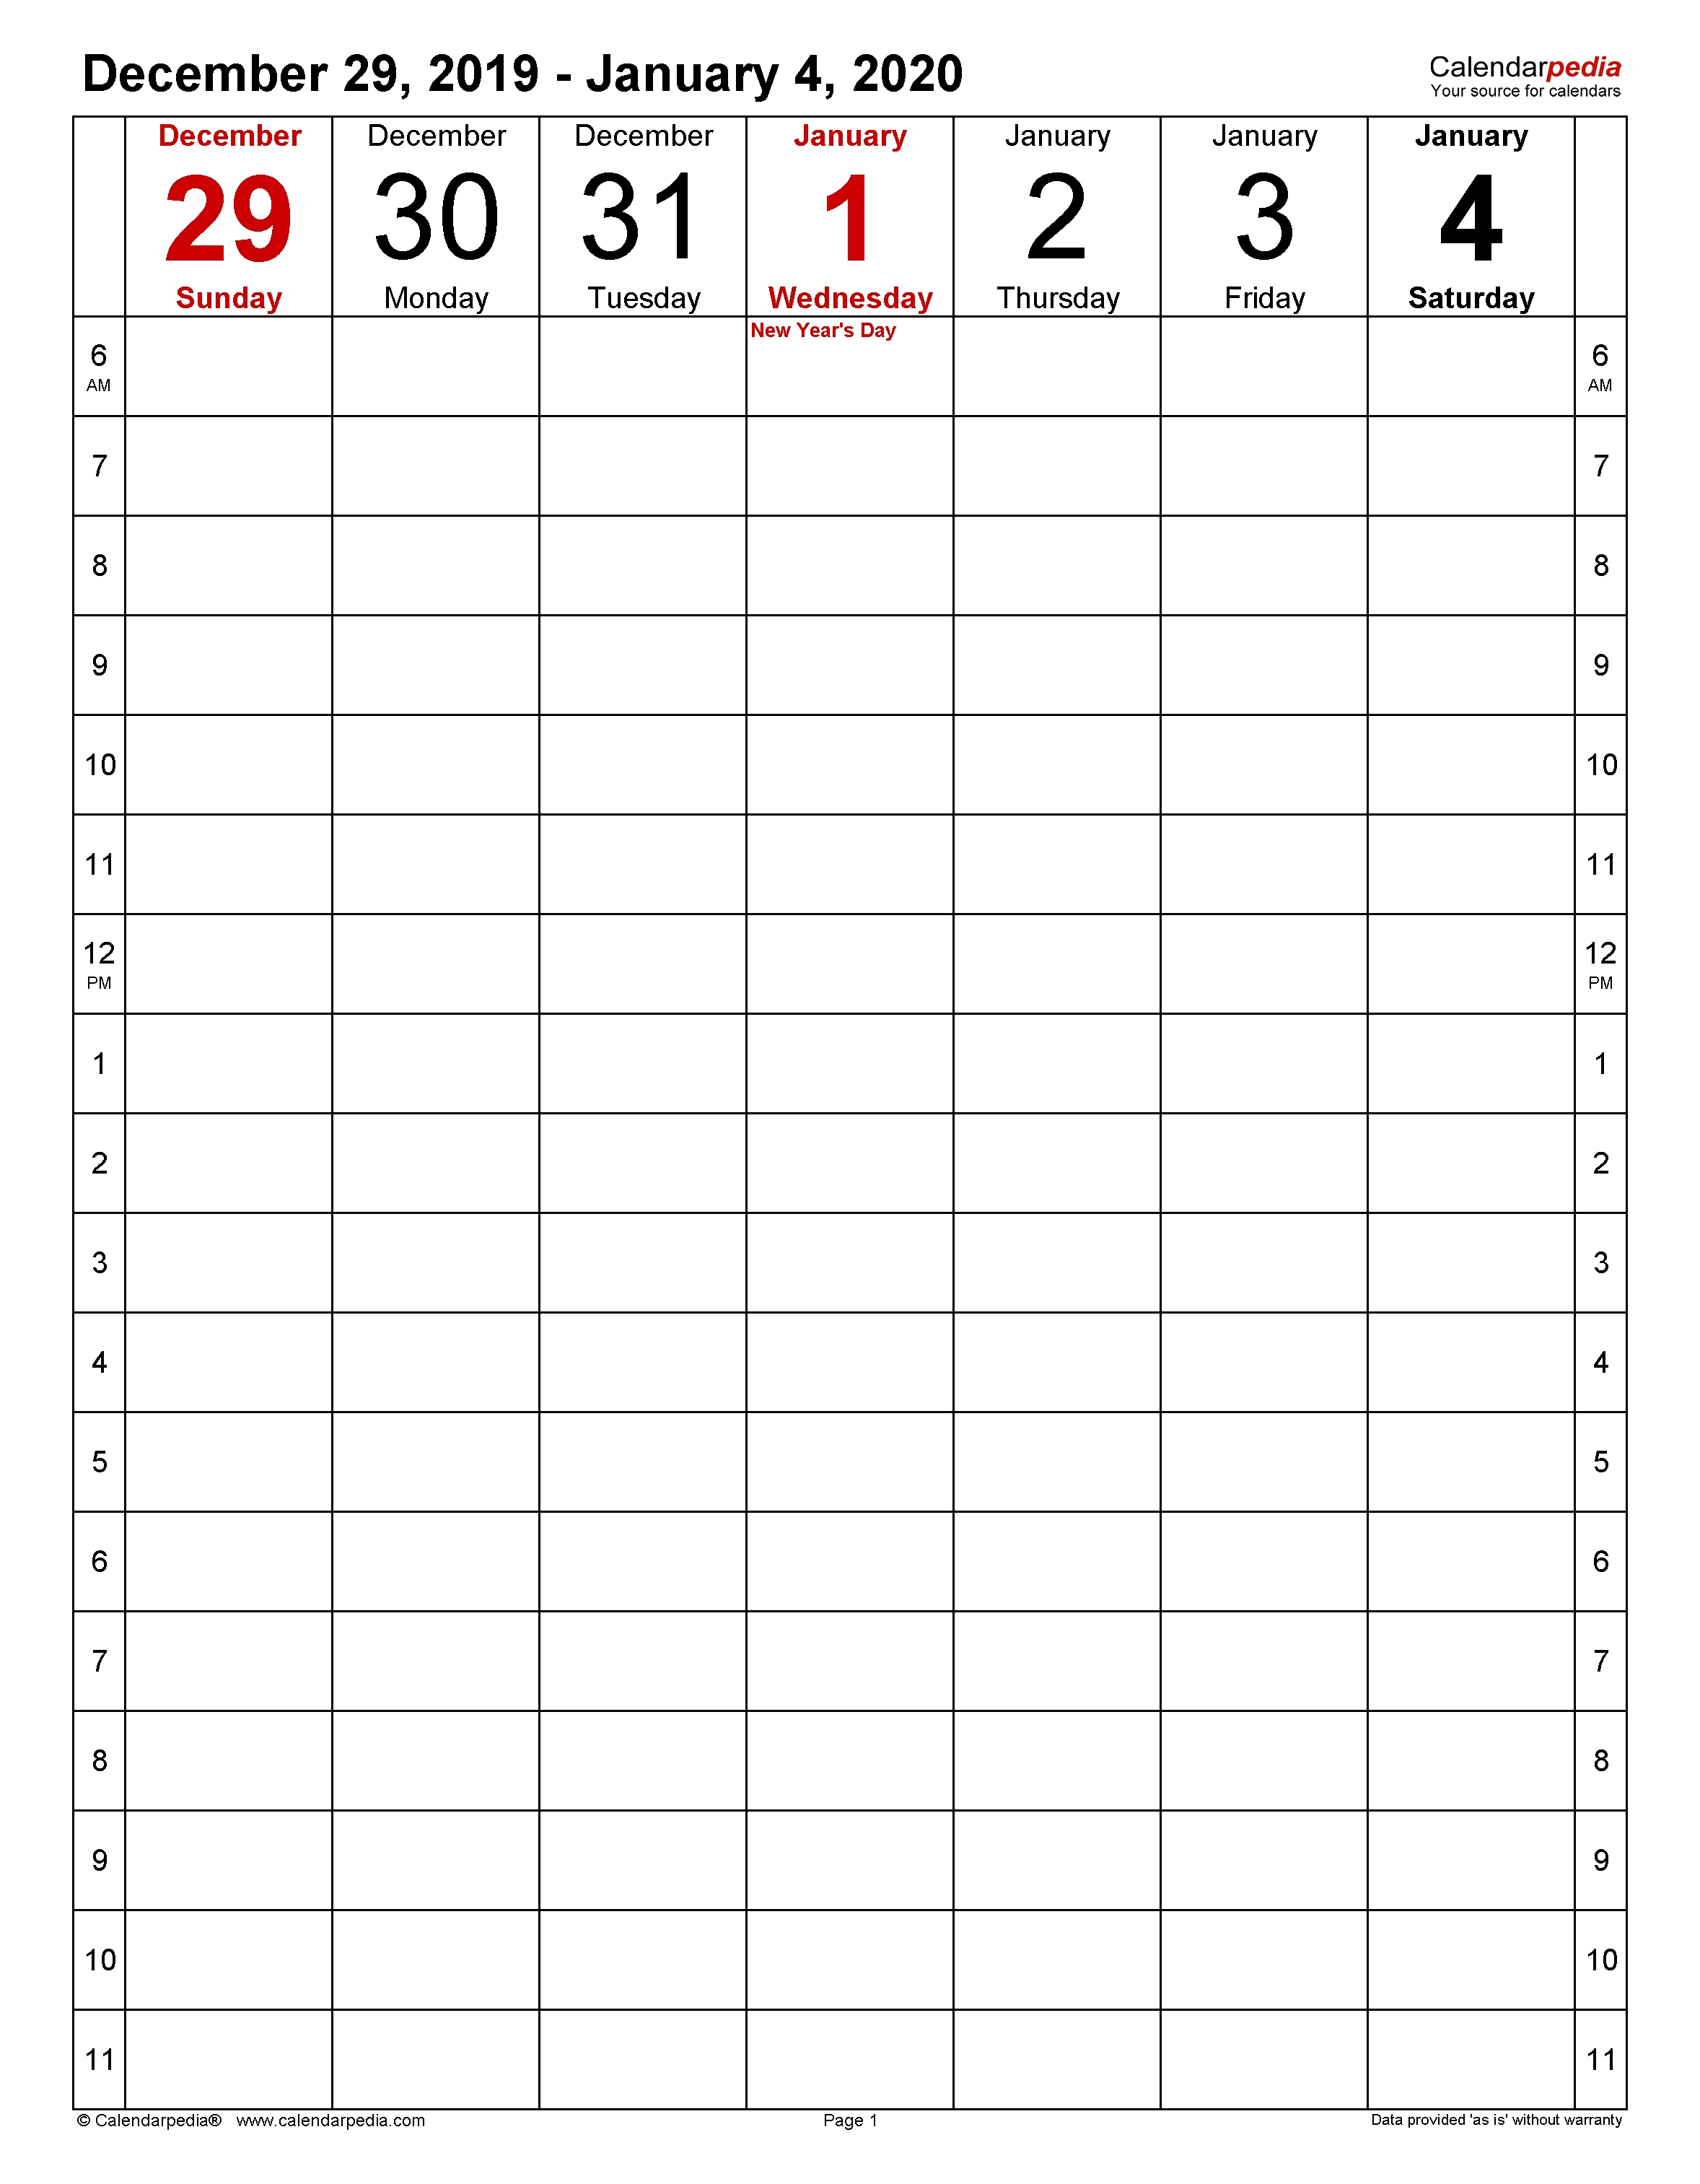 Weekly Calendars 2020 For Word - 12 Free Printable Templates for Free Printable One Week Calendar 2020